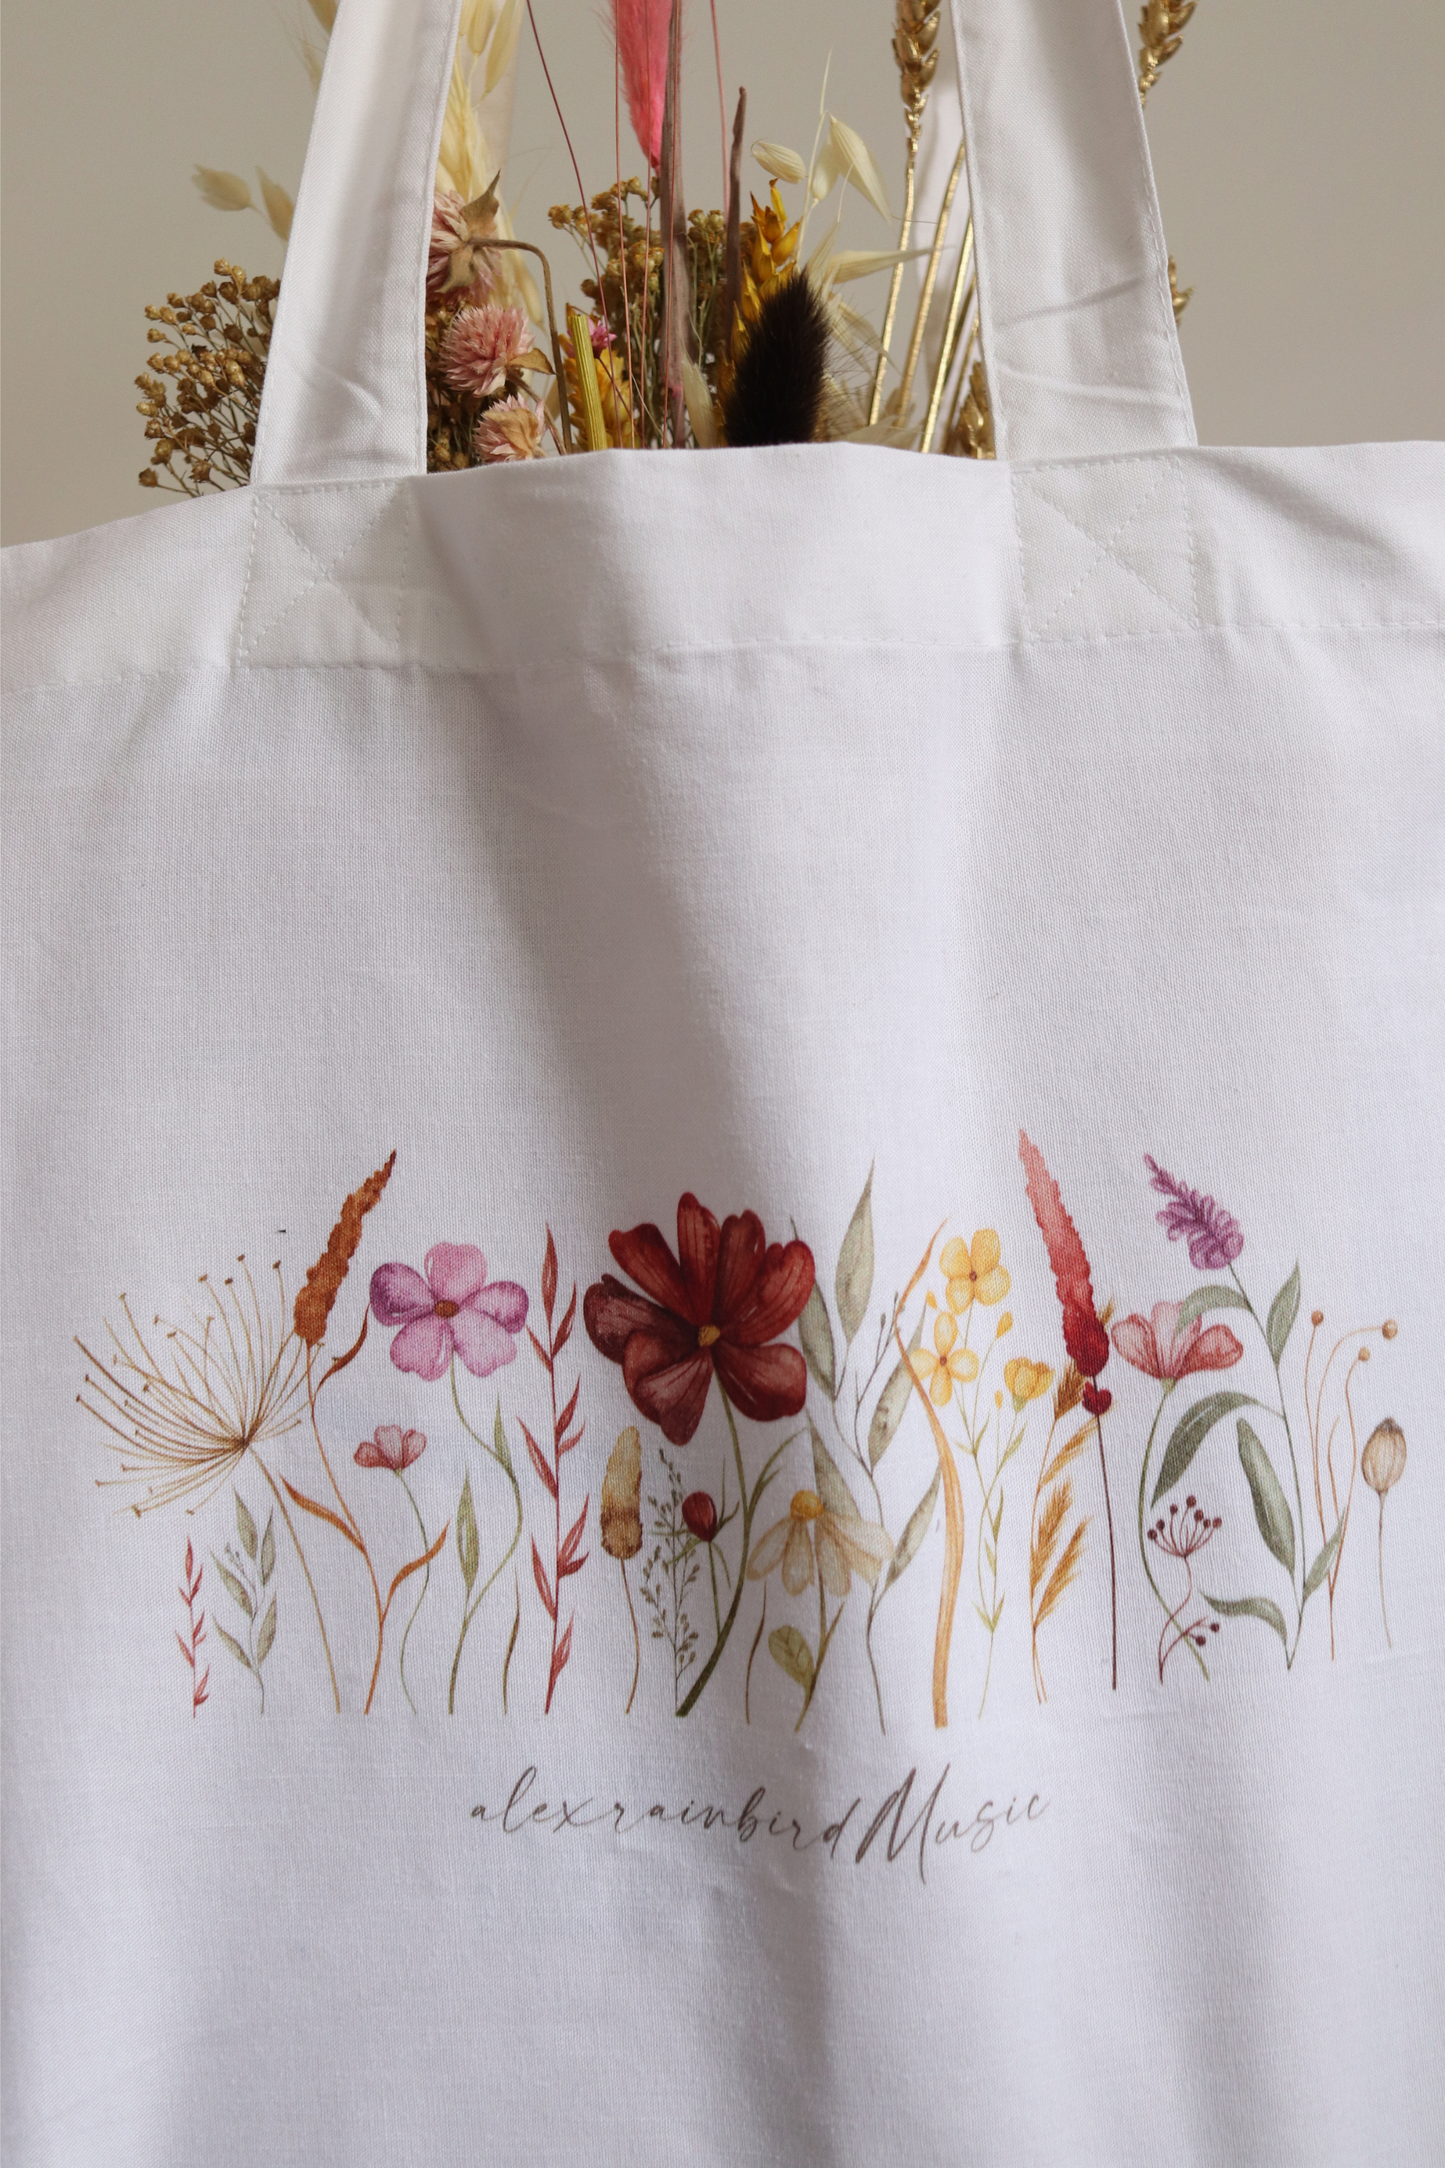 Spring Wildflower Organic Tote Bag